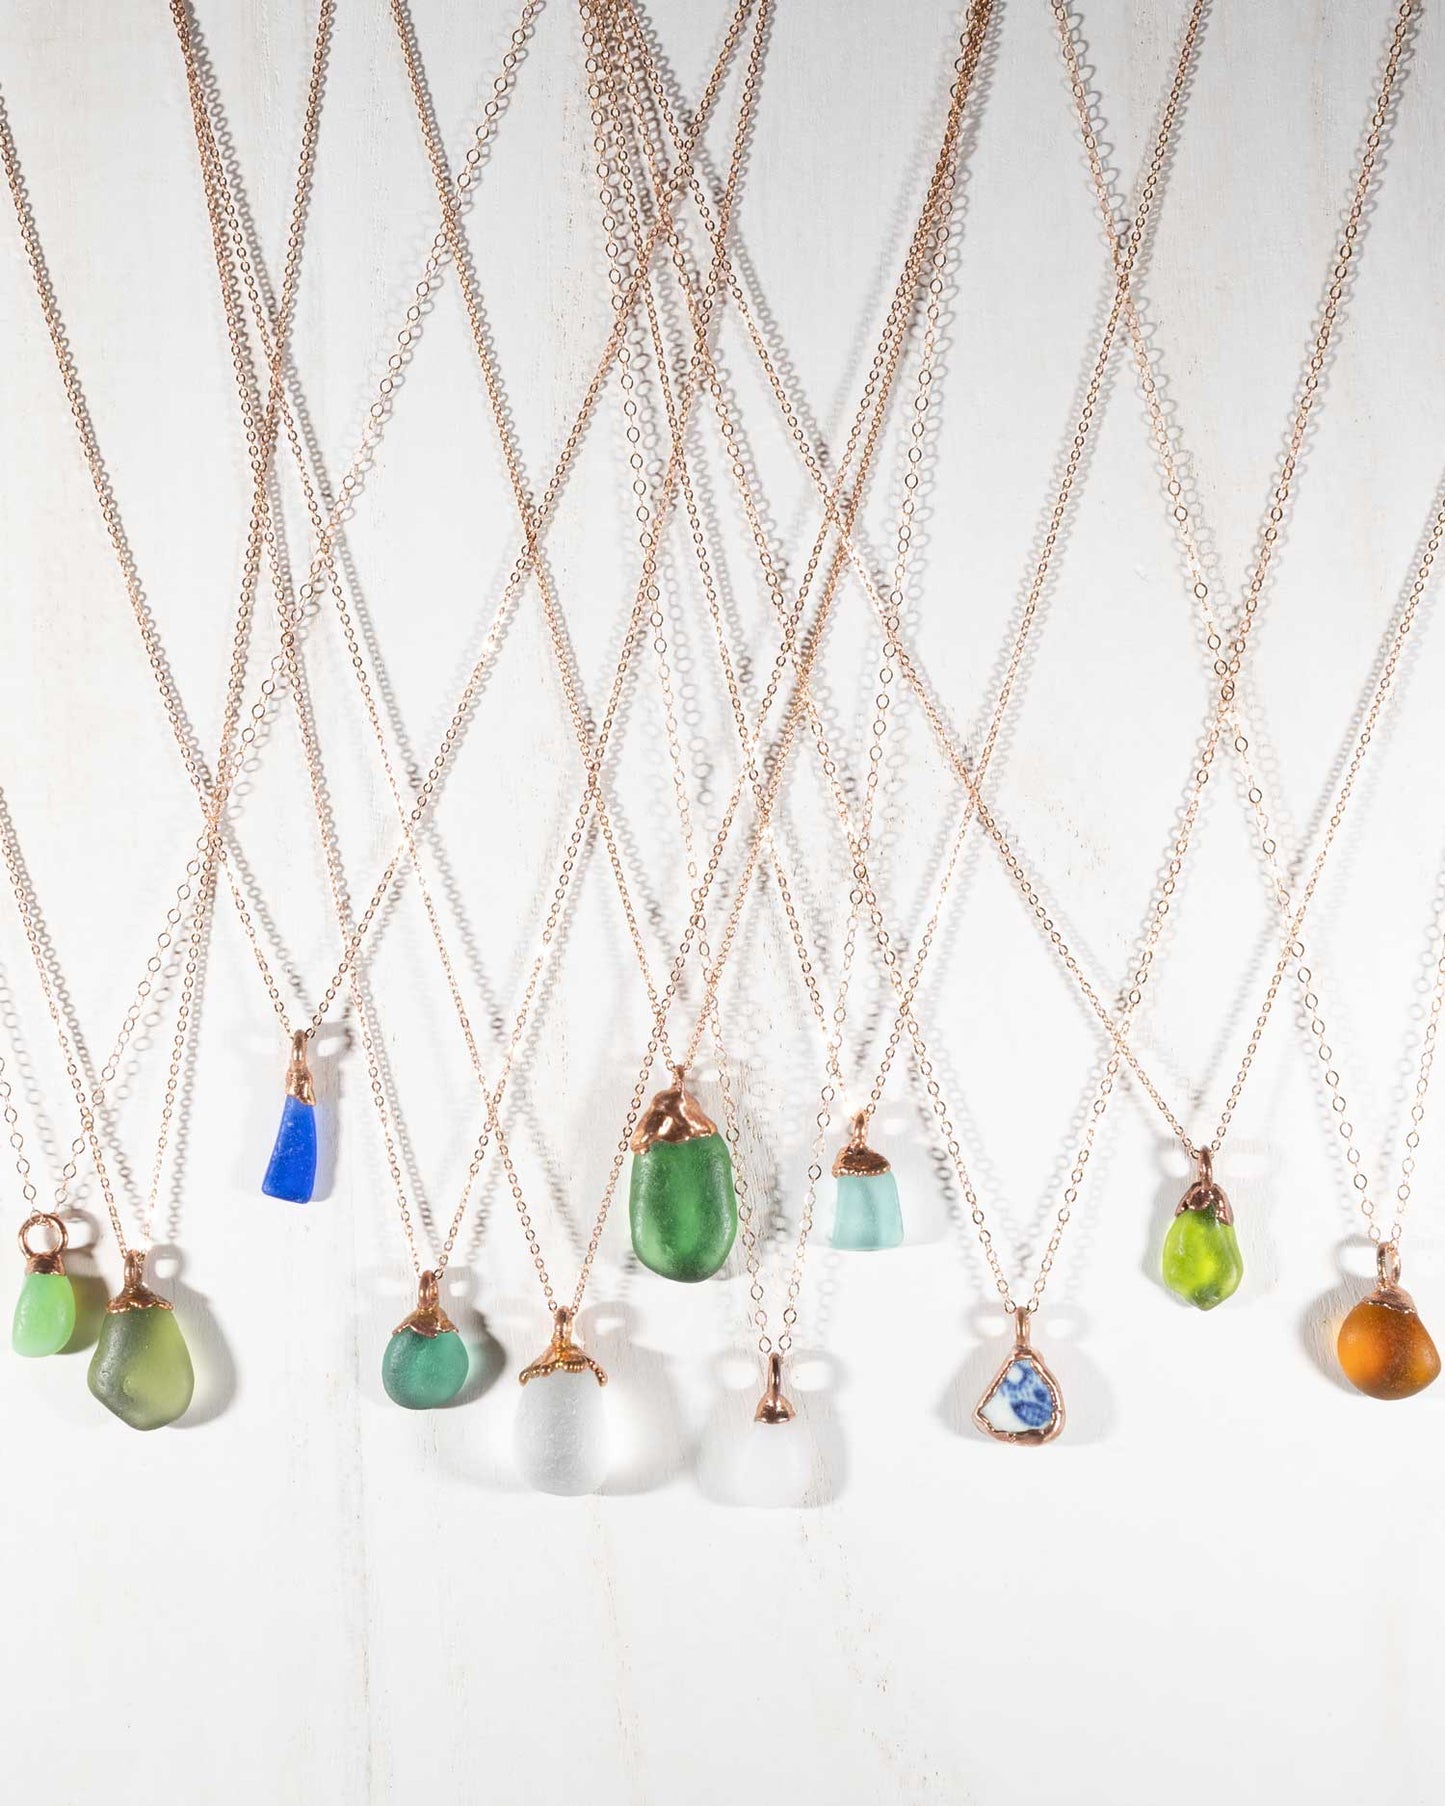 sea glass mini pendant necklaces available for sale